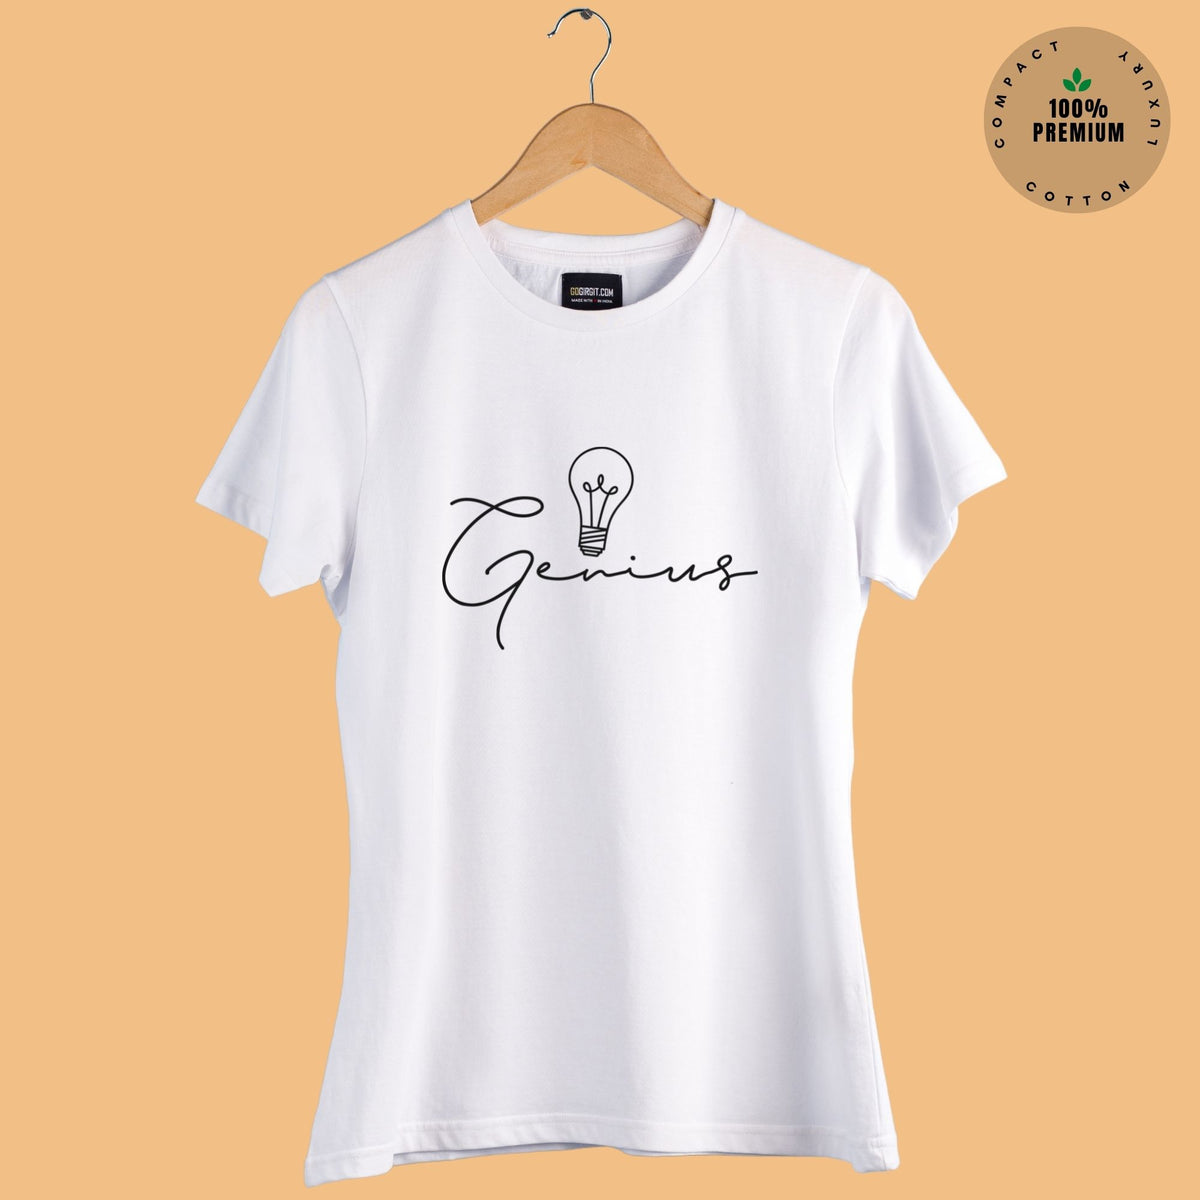 Printed-premium-cotton-women-s-round-neck-genius-white-half-sleeve-t-shirt-gogirgit